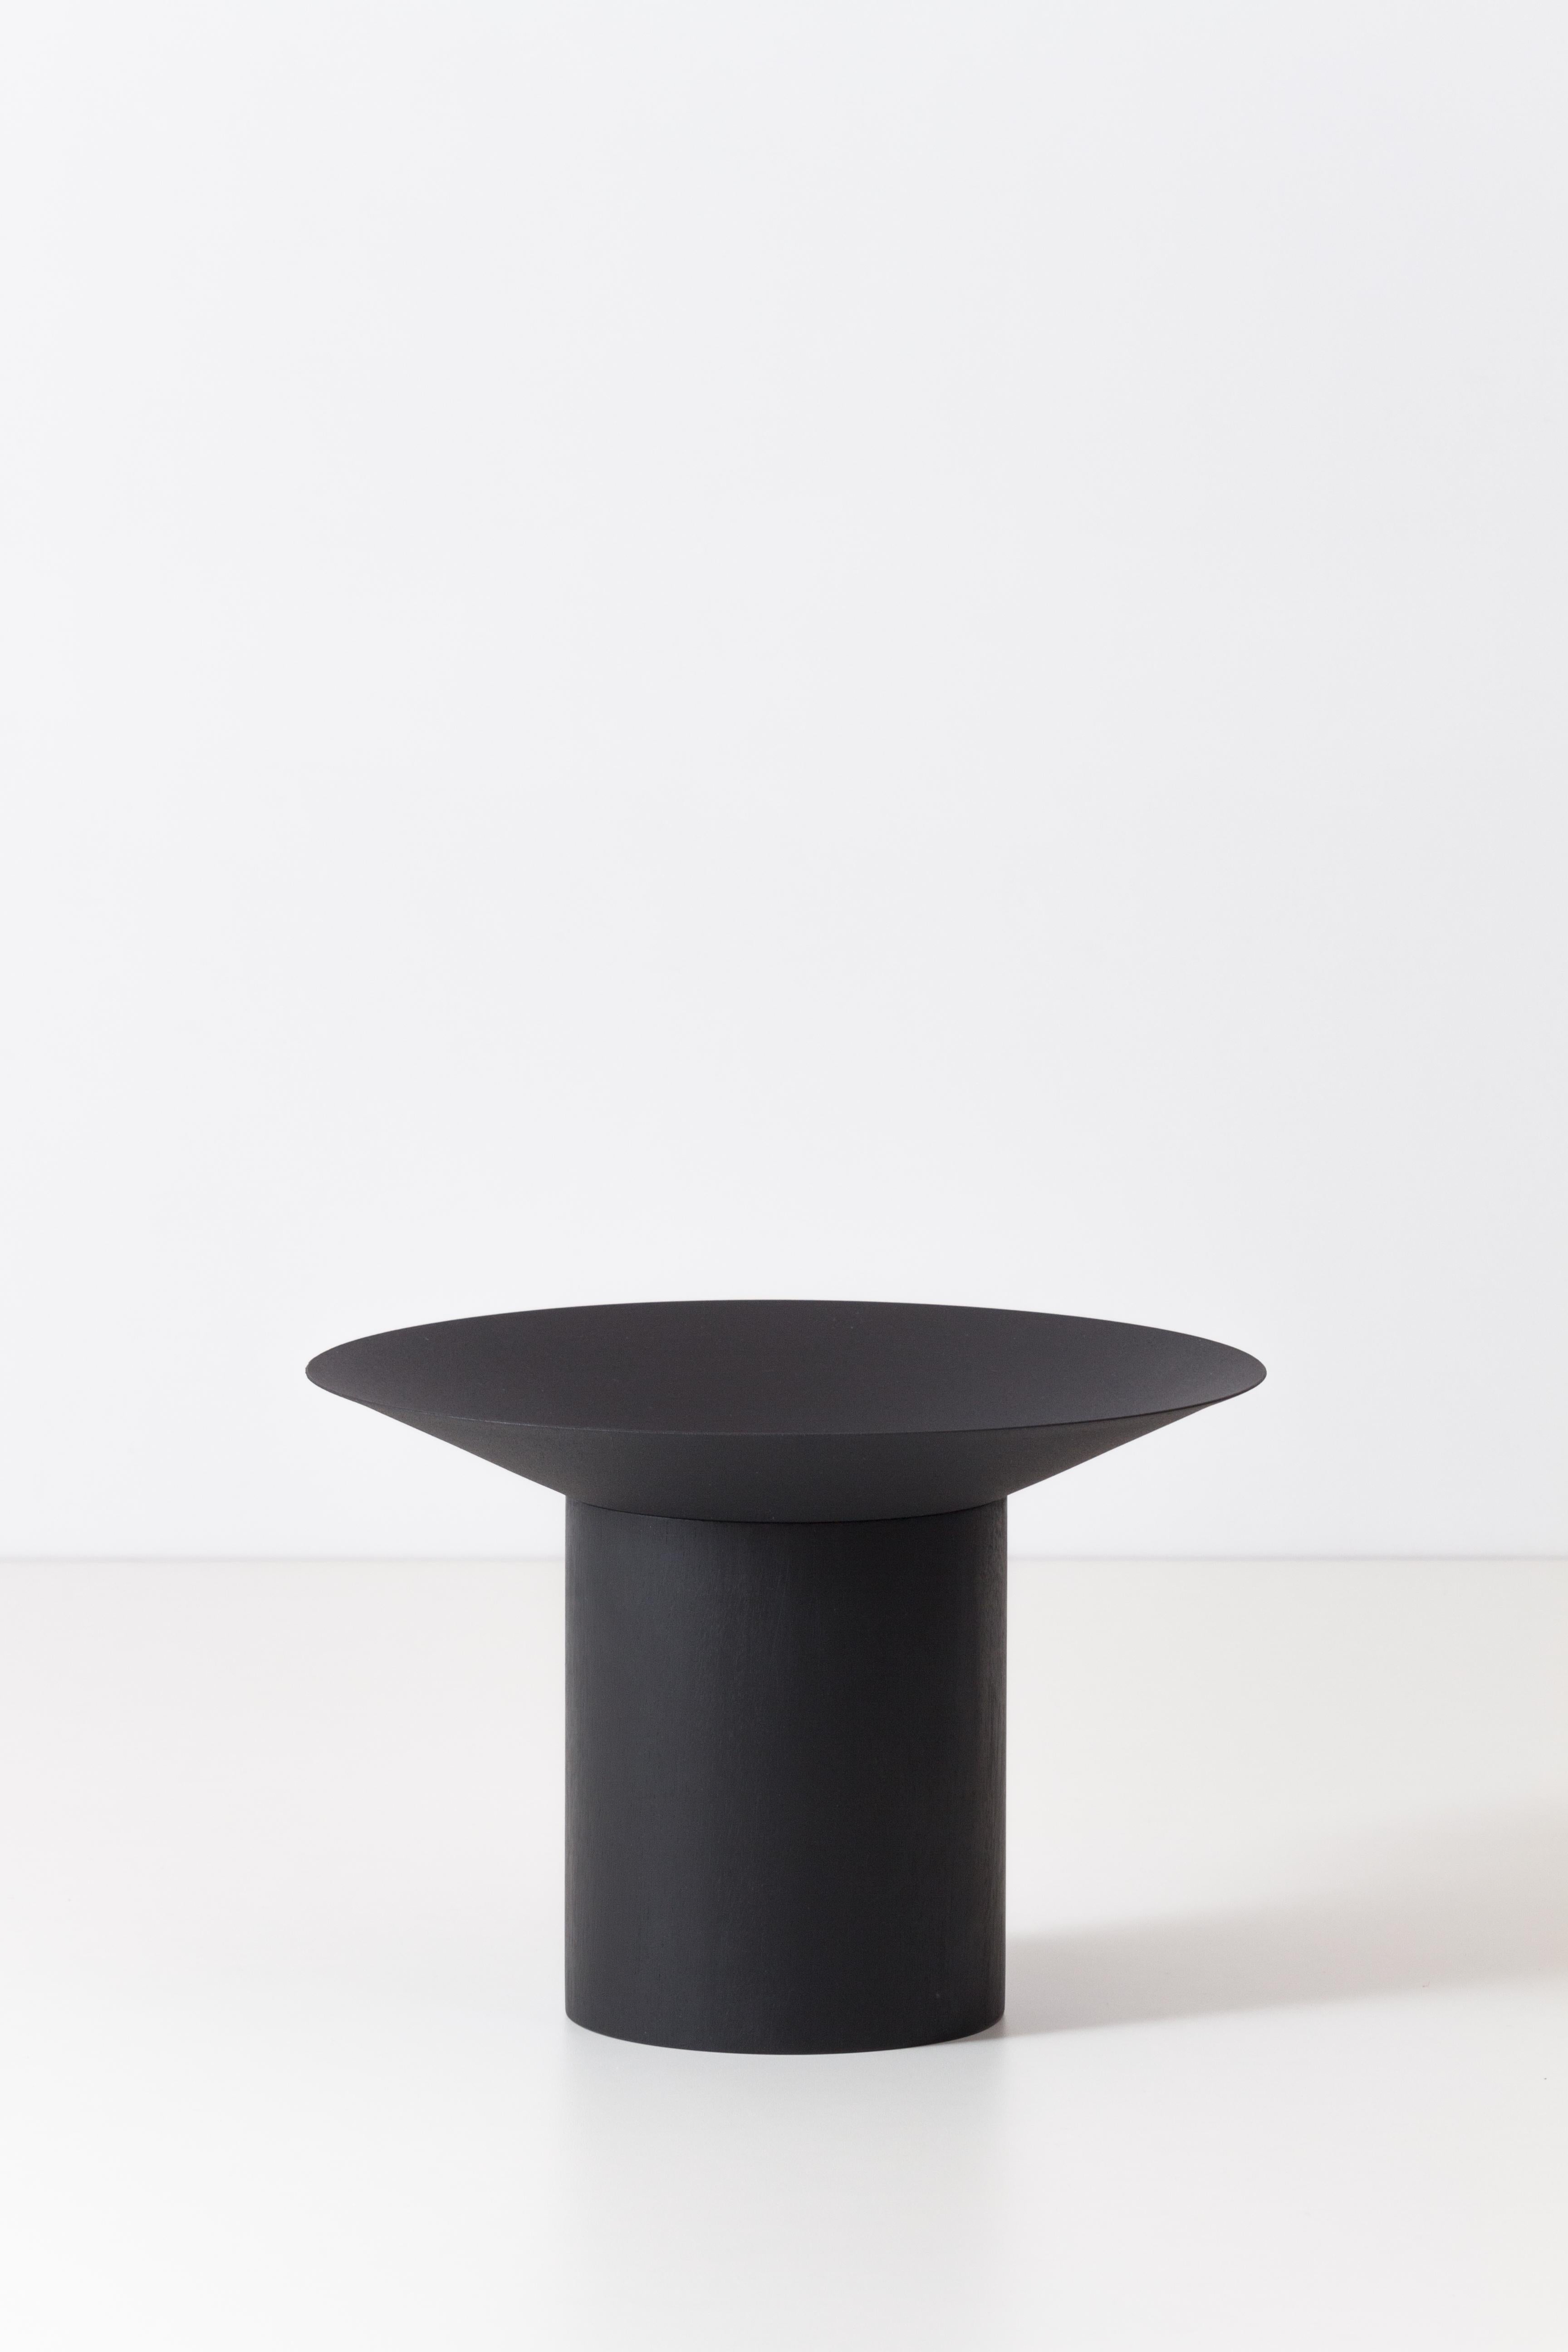 Dossel Collection (Set of 5) by Estúdio Dentro, Brazilian Contemporary Design For Sale 6